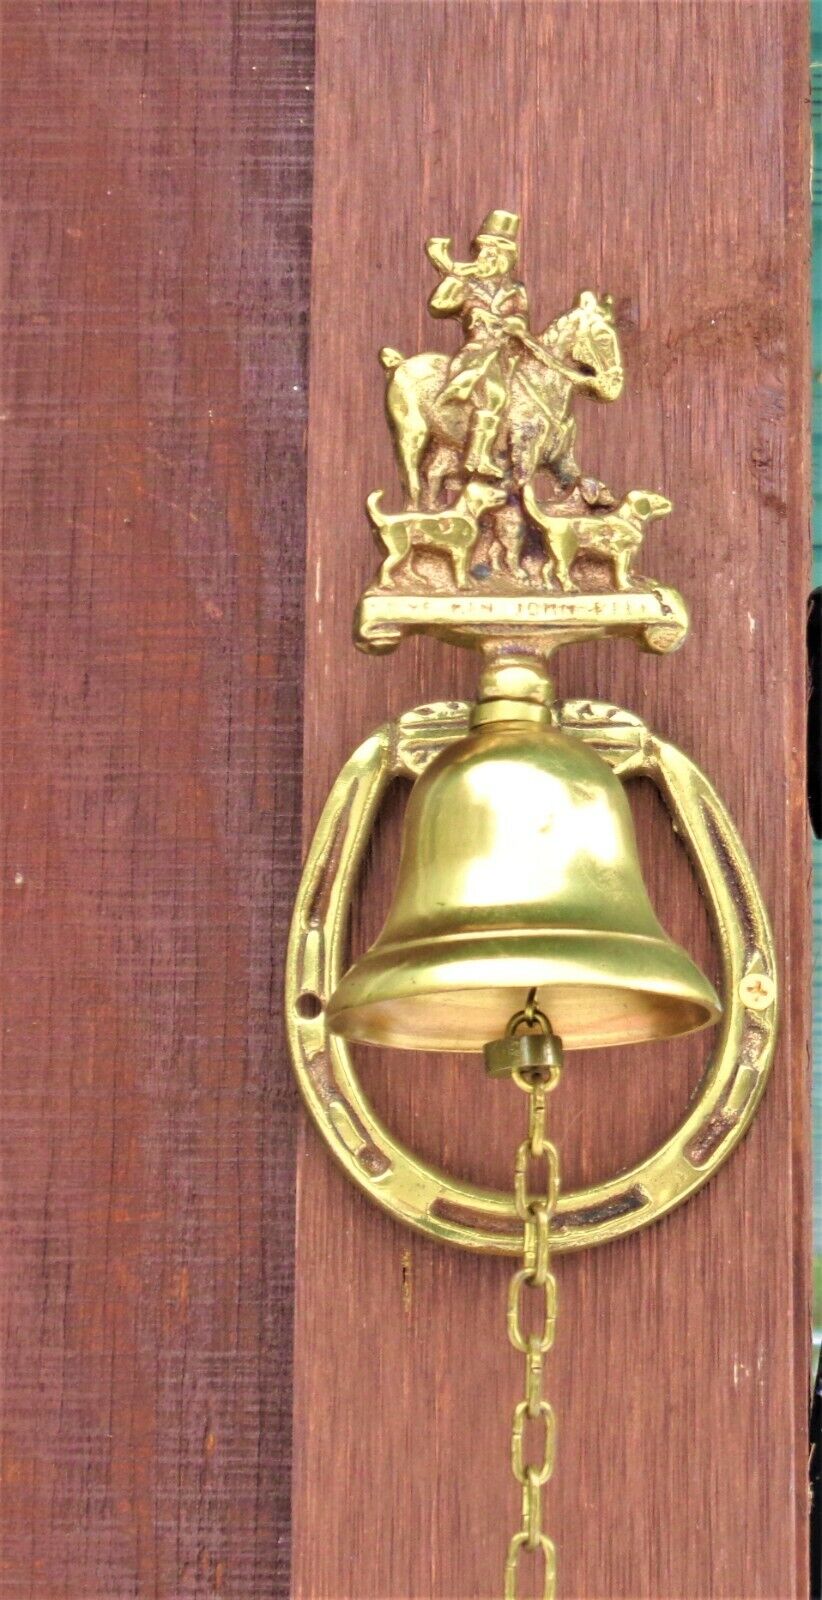   Downton Abbey Vintage  Edwardian  Brass Wall Hanging Door Bell 